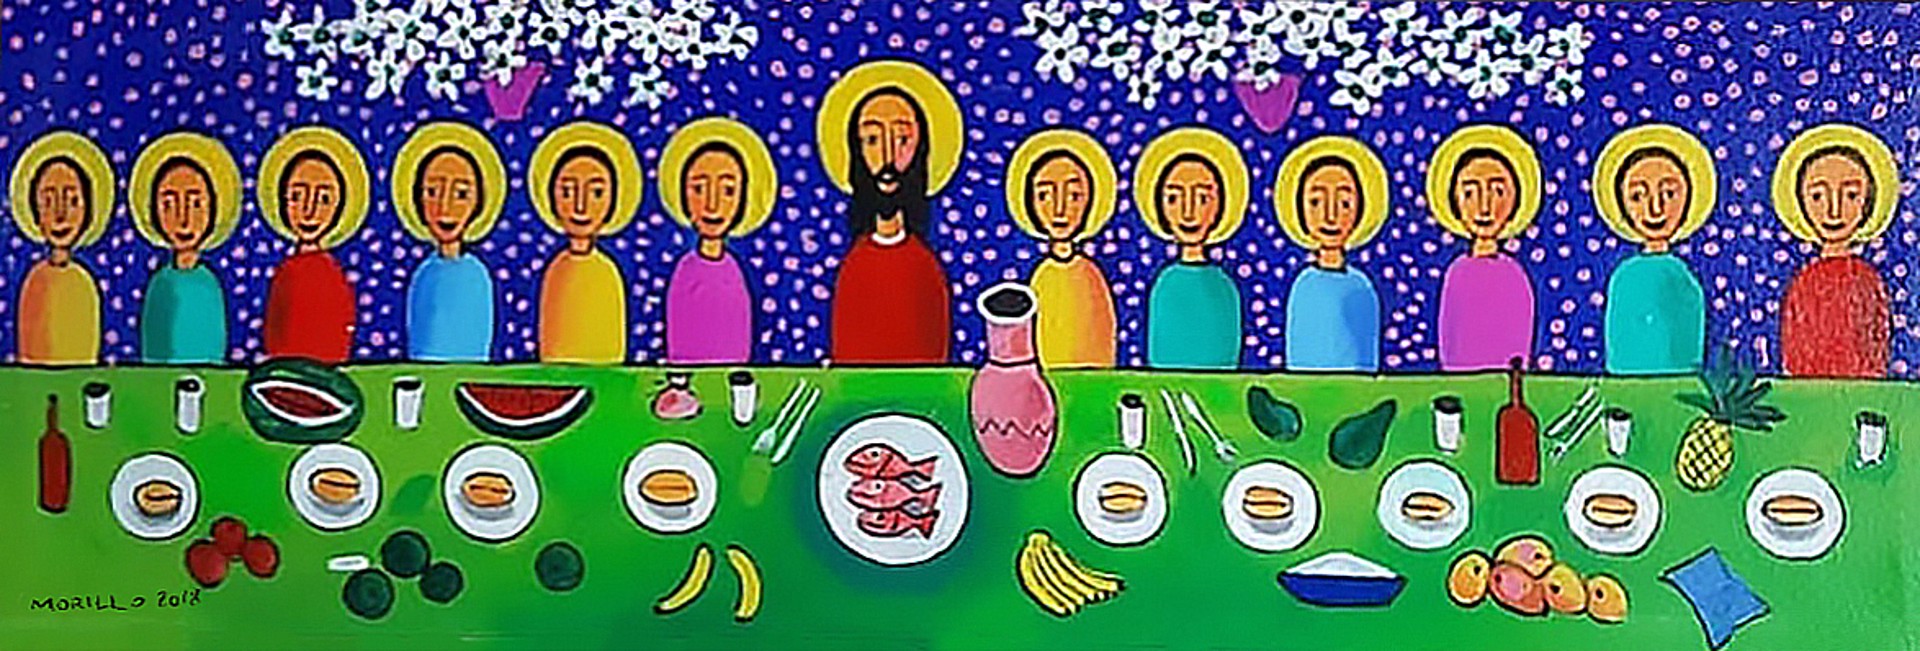 The Last Supper Feast #16JM-DR by José Morillo (Dominican, b.1975)